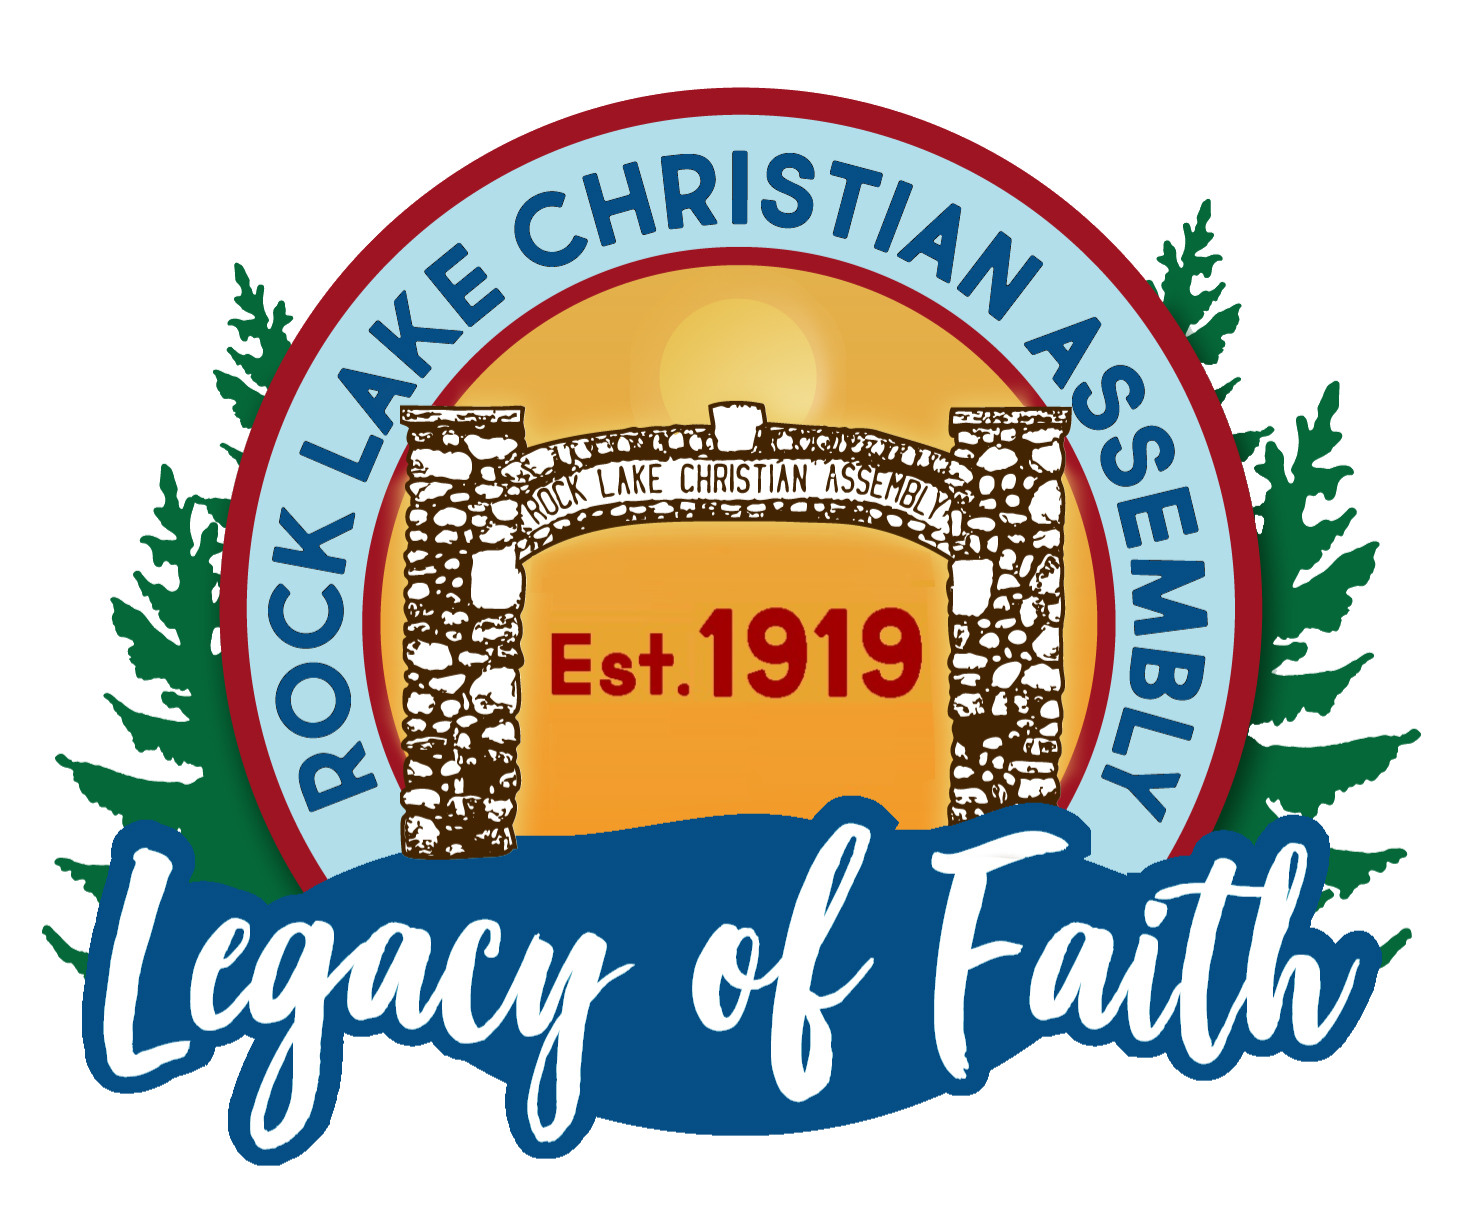 Rock Lake Christian Assembly